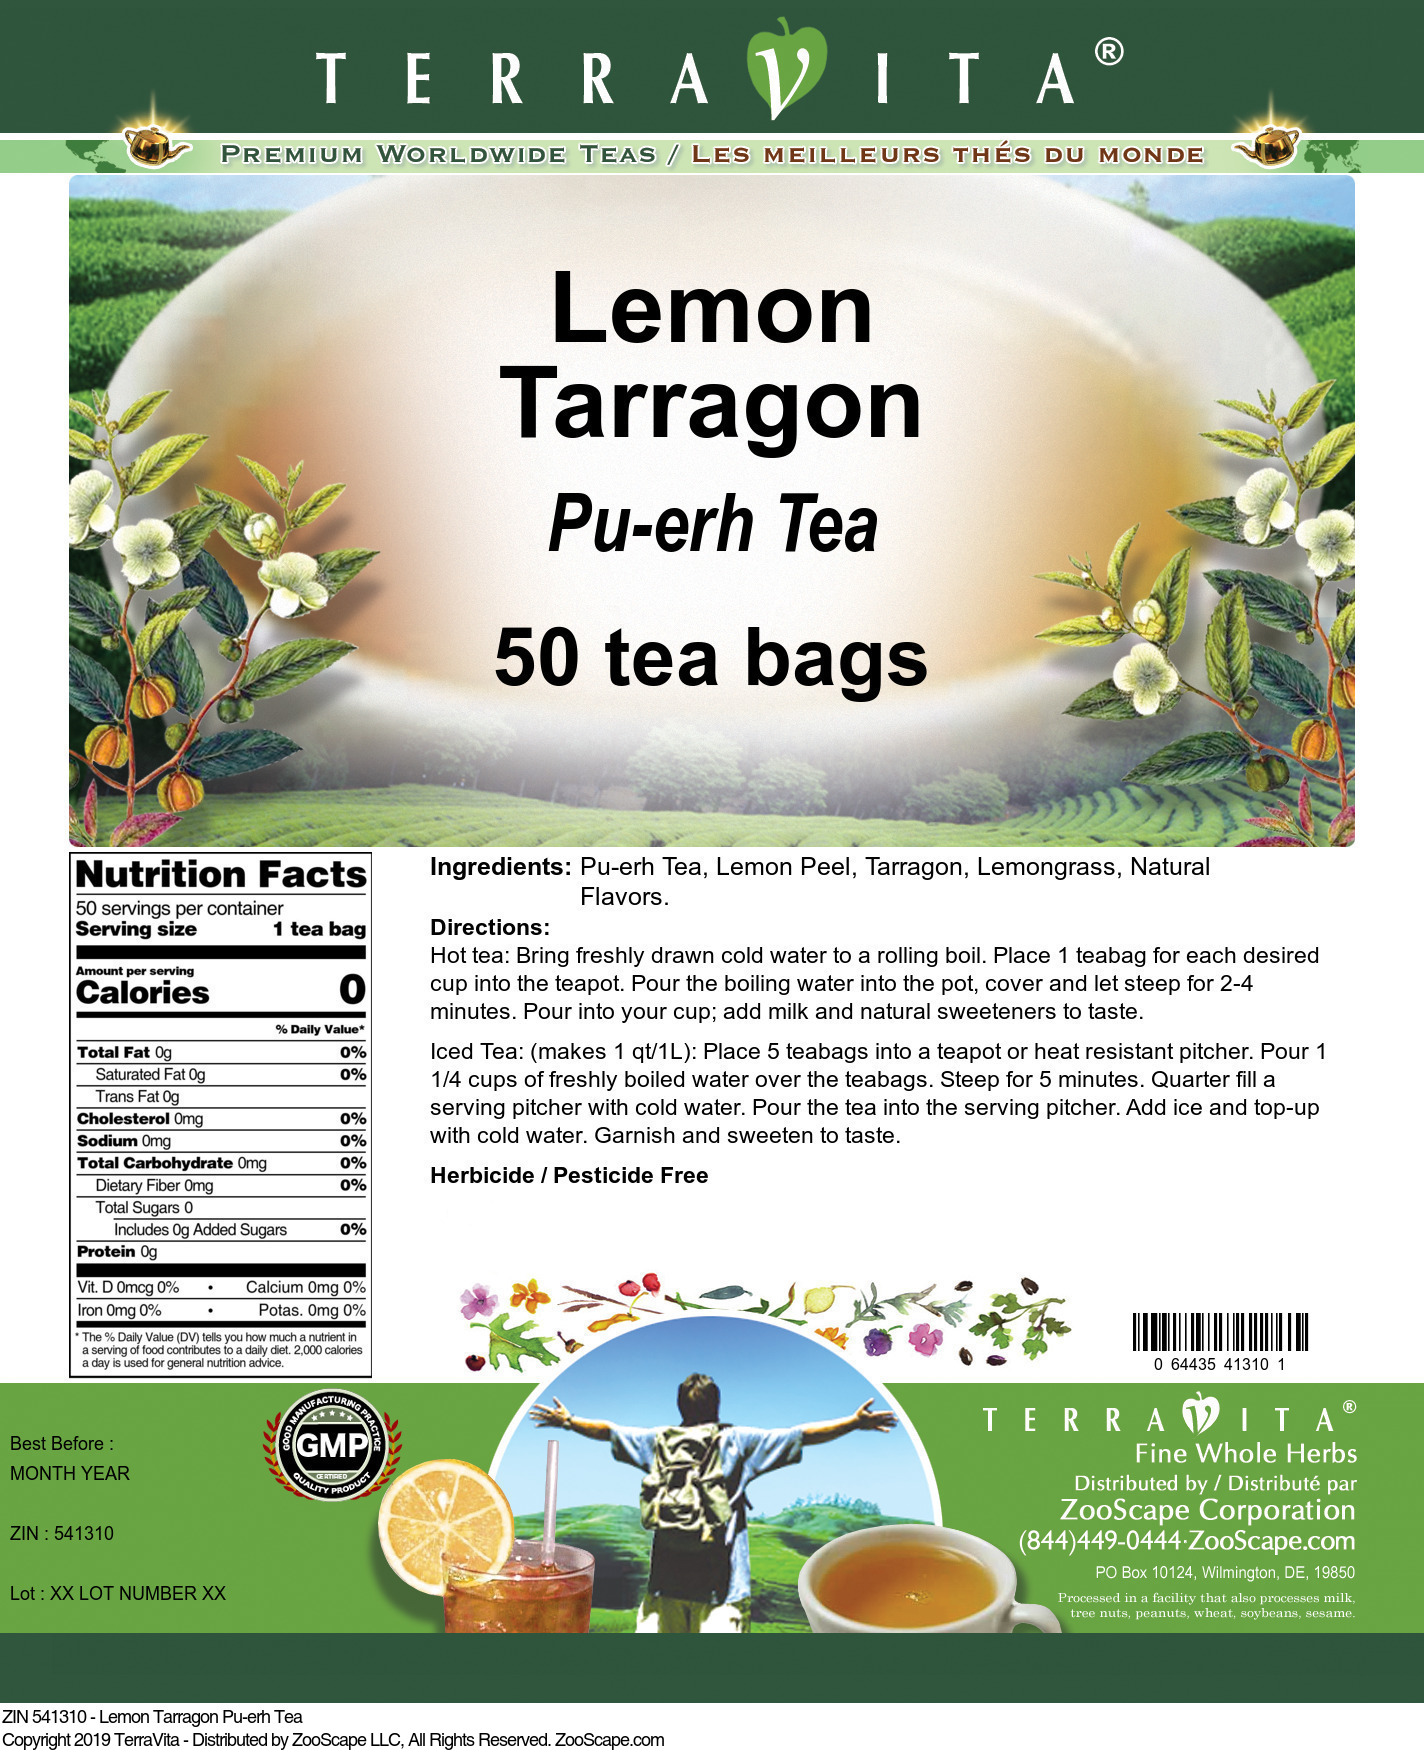 Lemon Tarragon Pu-erh Tea - Label